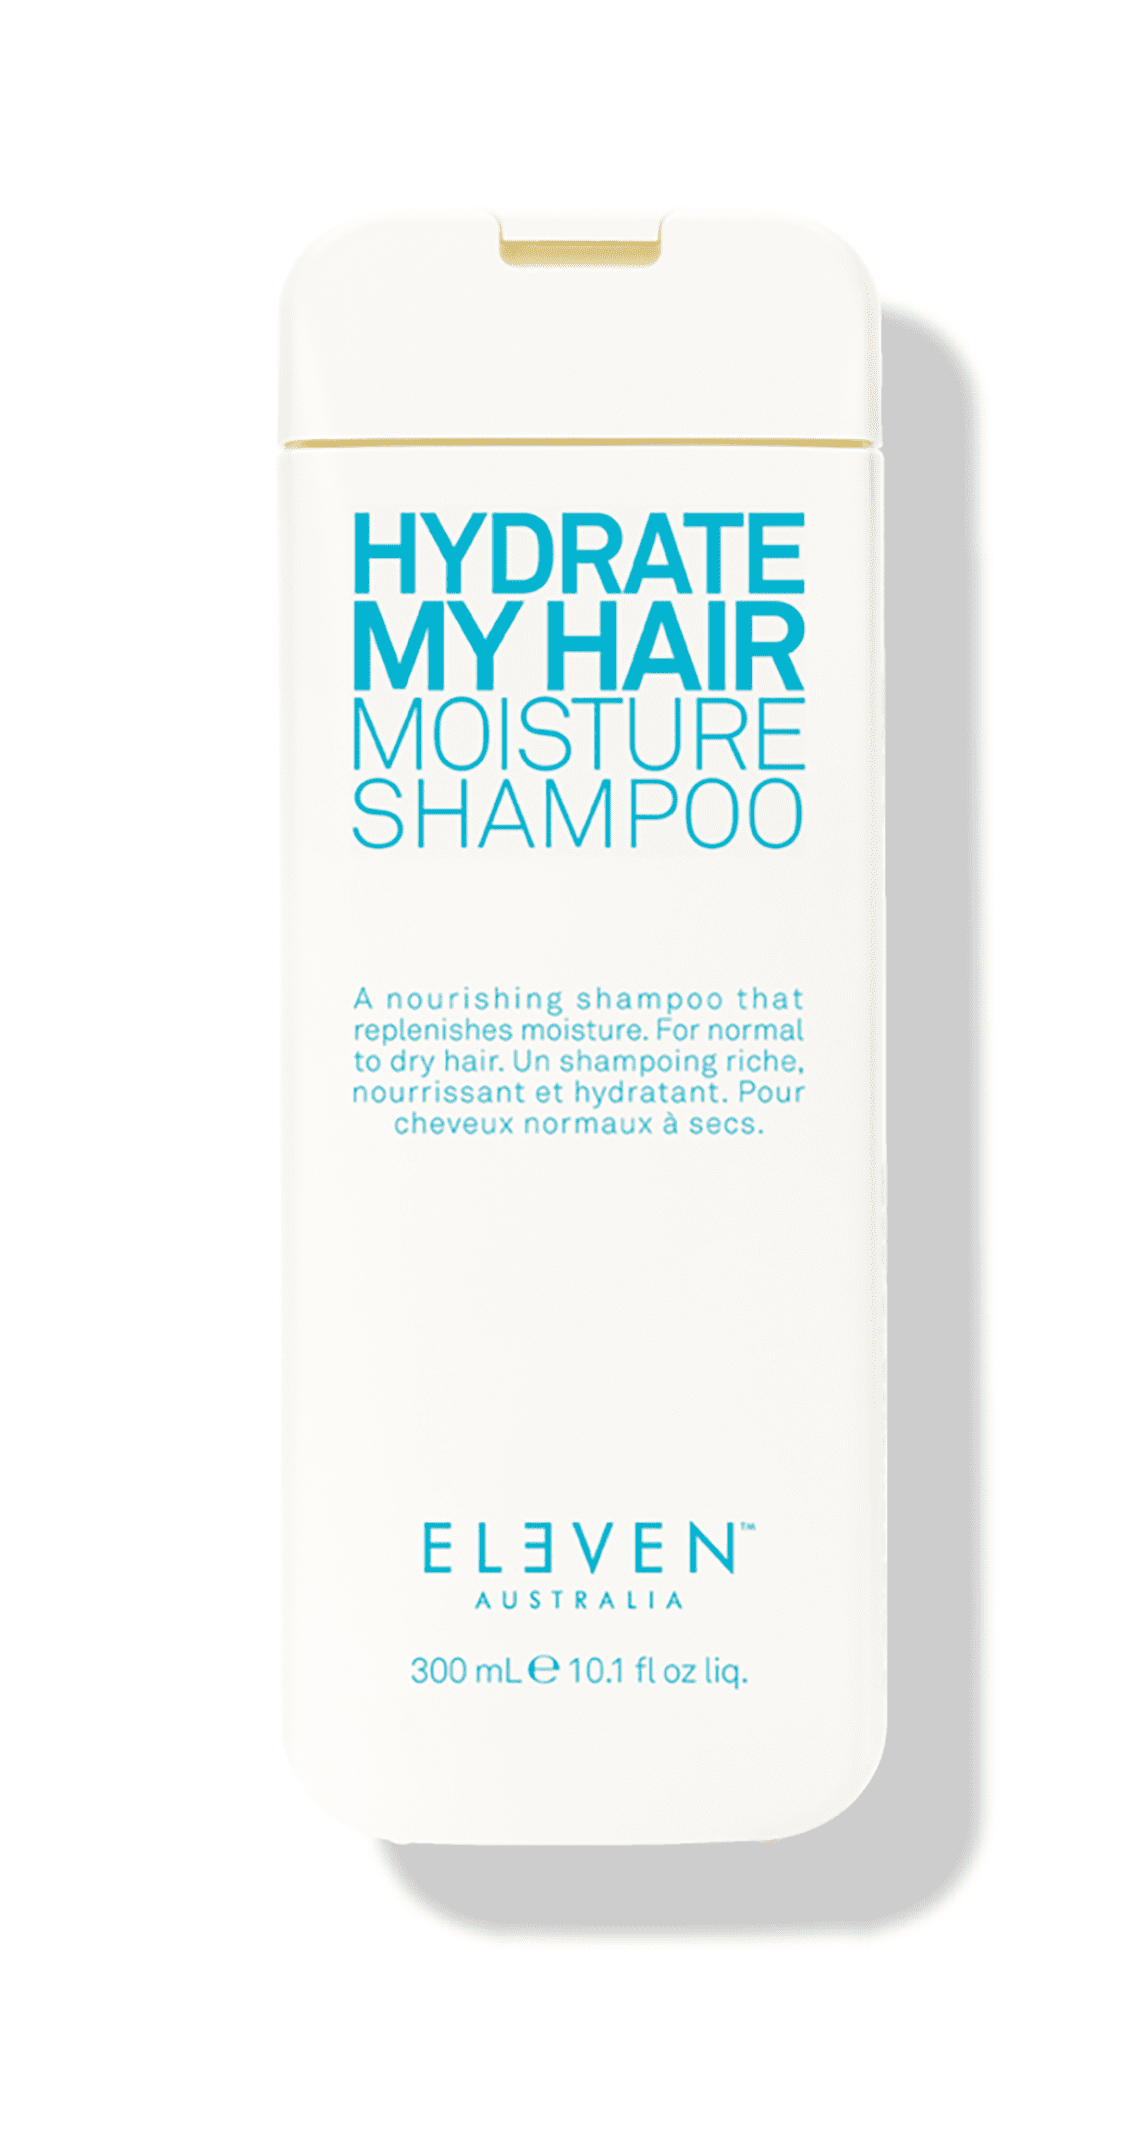 Hydrate My Hair Moisture Shampoo - ELEVEN Australia